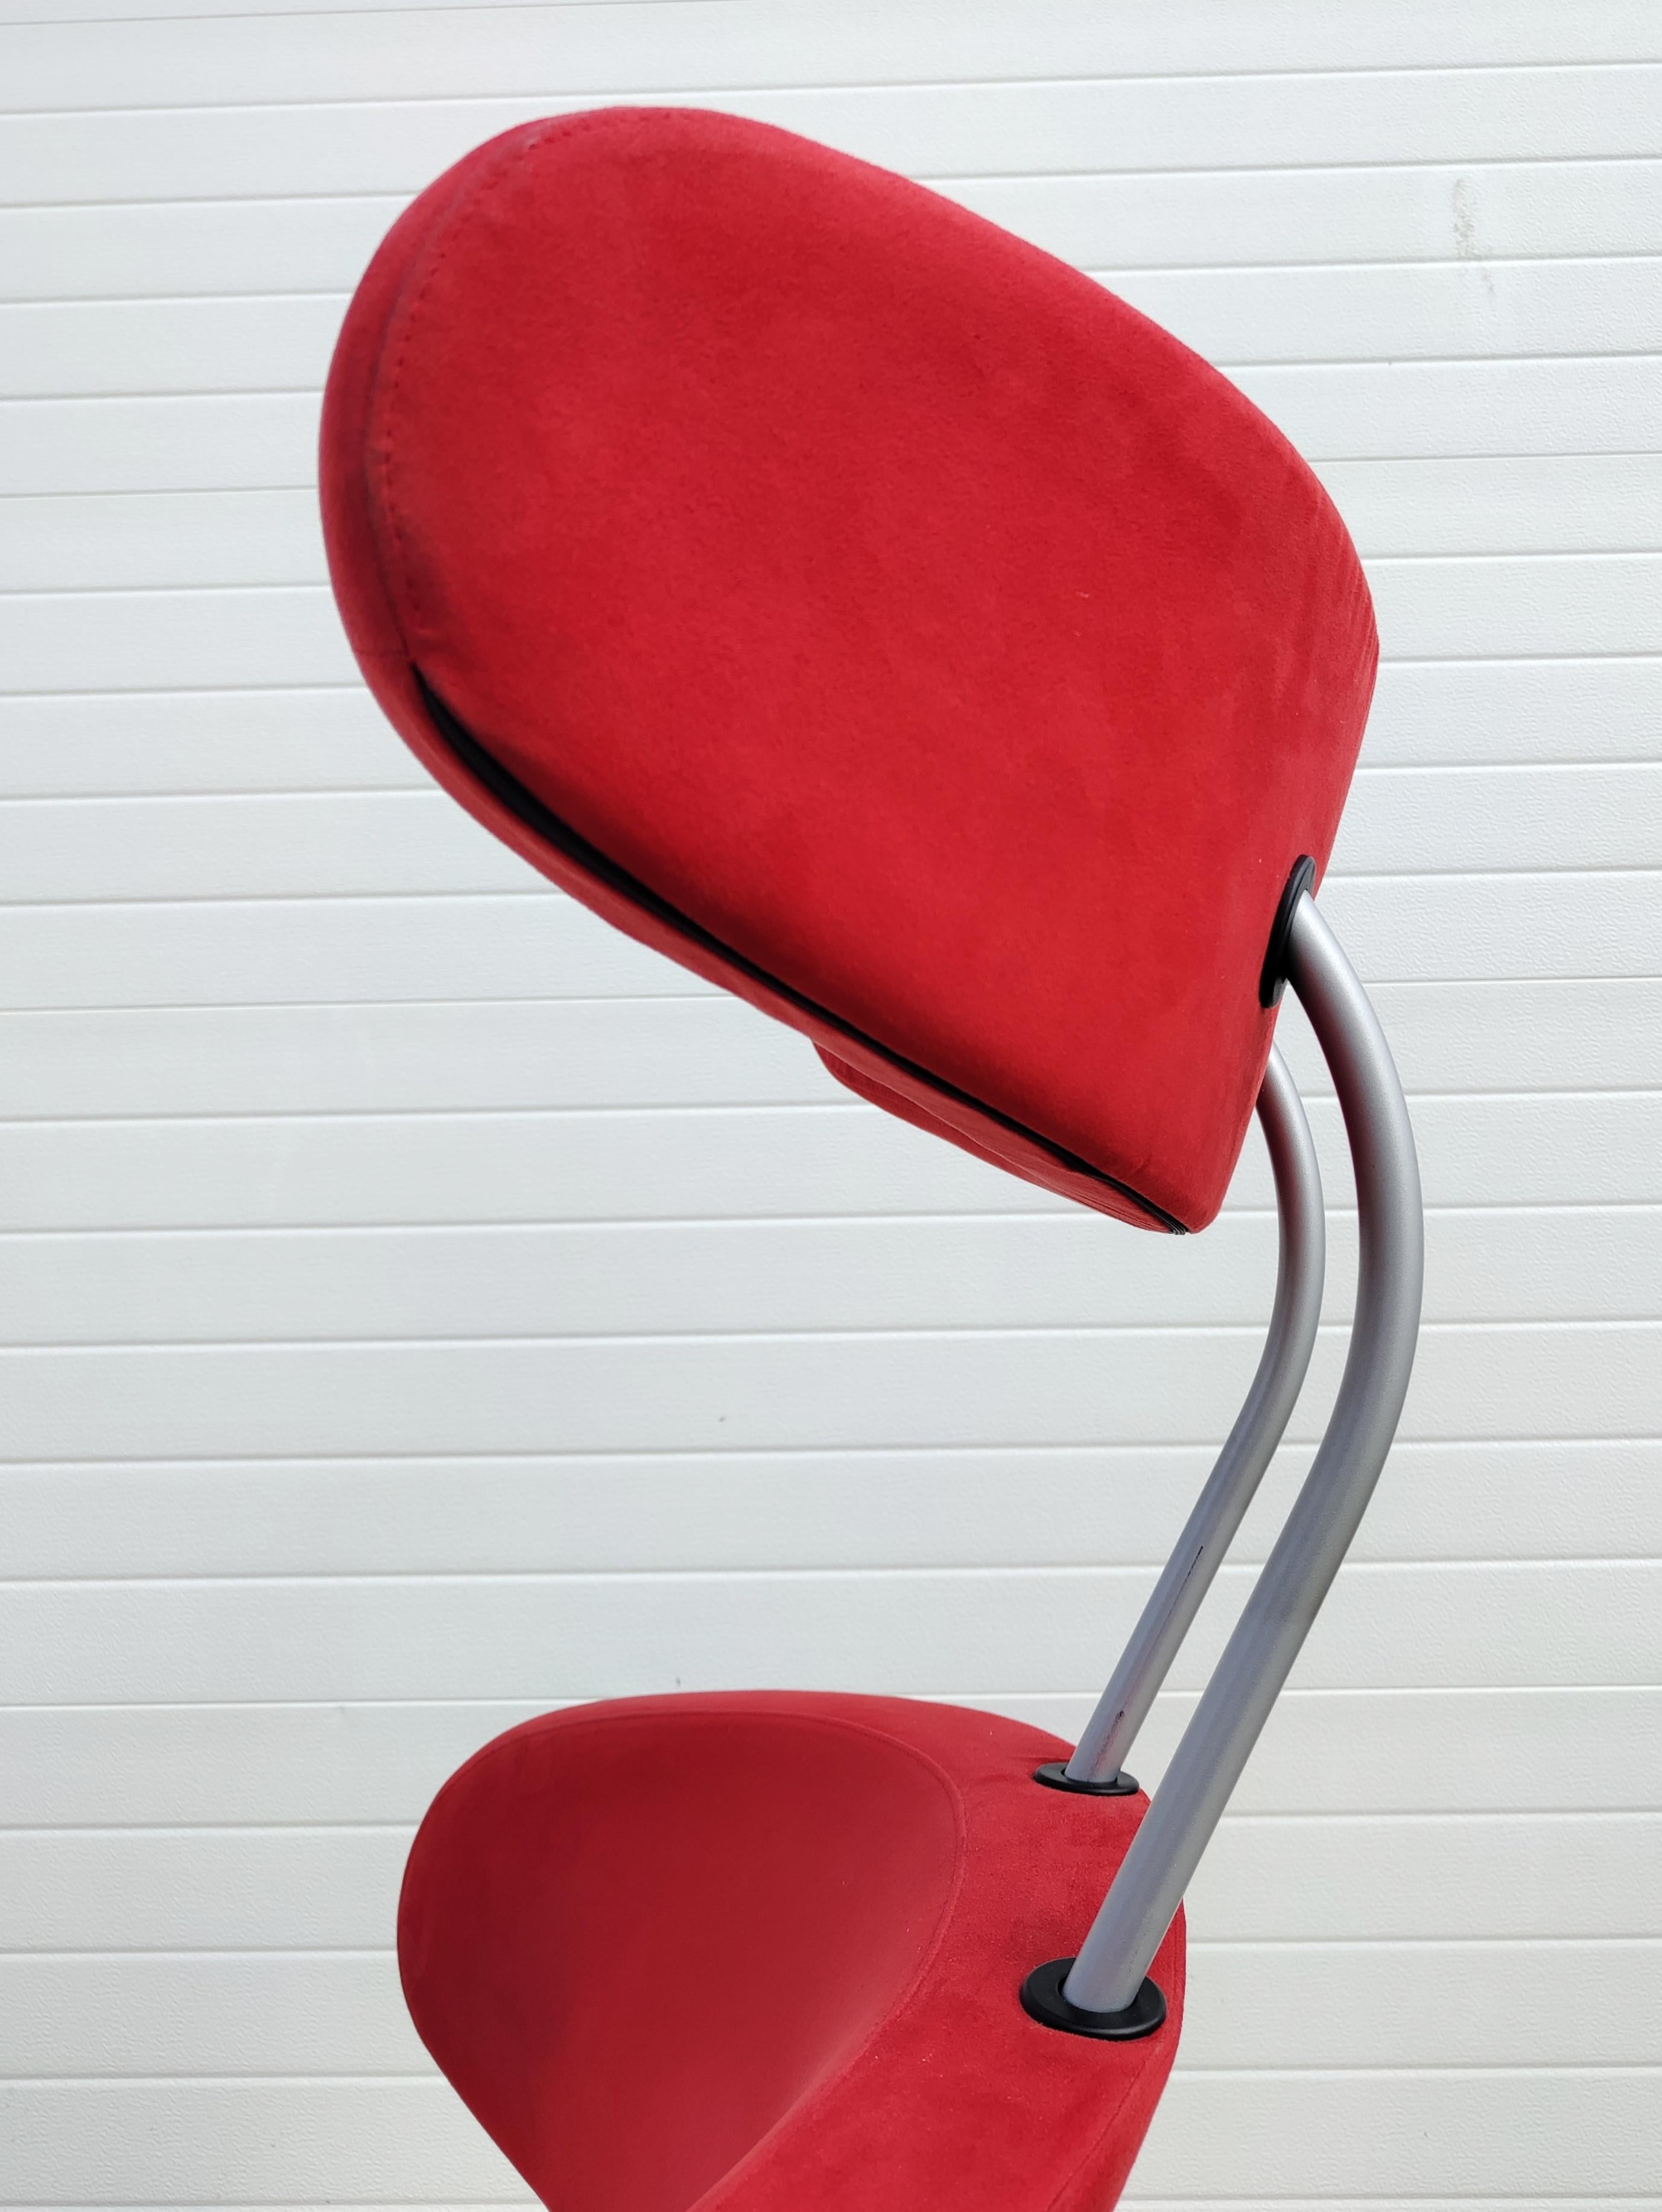 'Peel' Armchair or Swivel Chair Designed by Olav Eldoy, Norway, 2002 For Sale 1